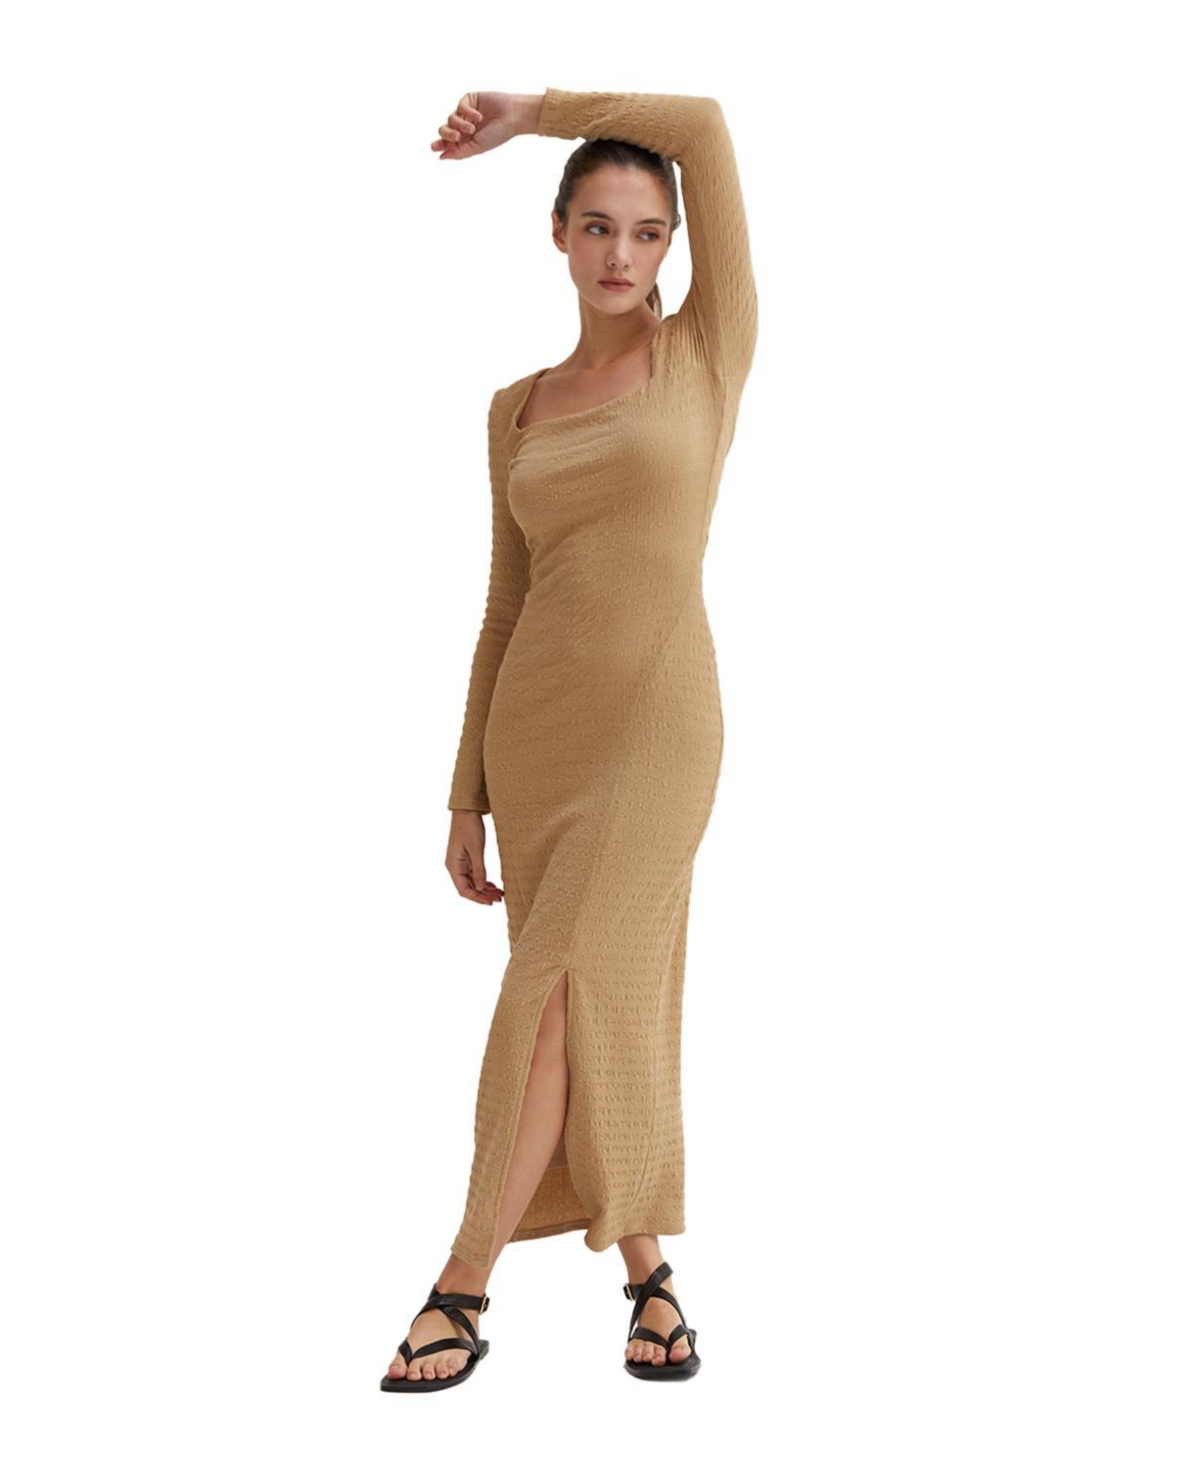 Women's Irene Square Neck Textured Maxi Dress - Light beige + camel